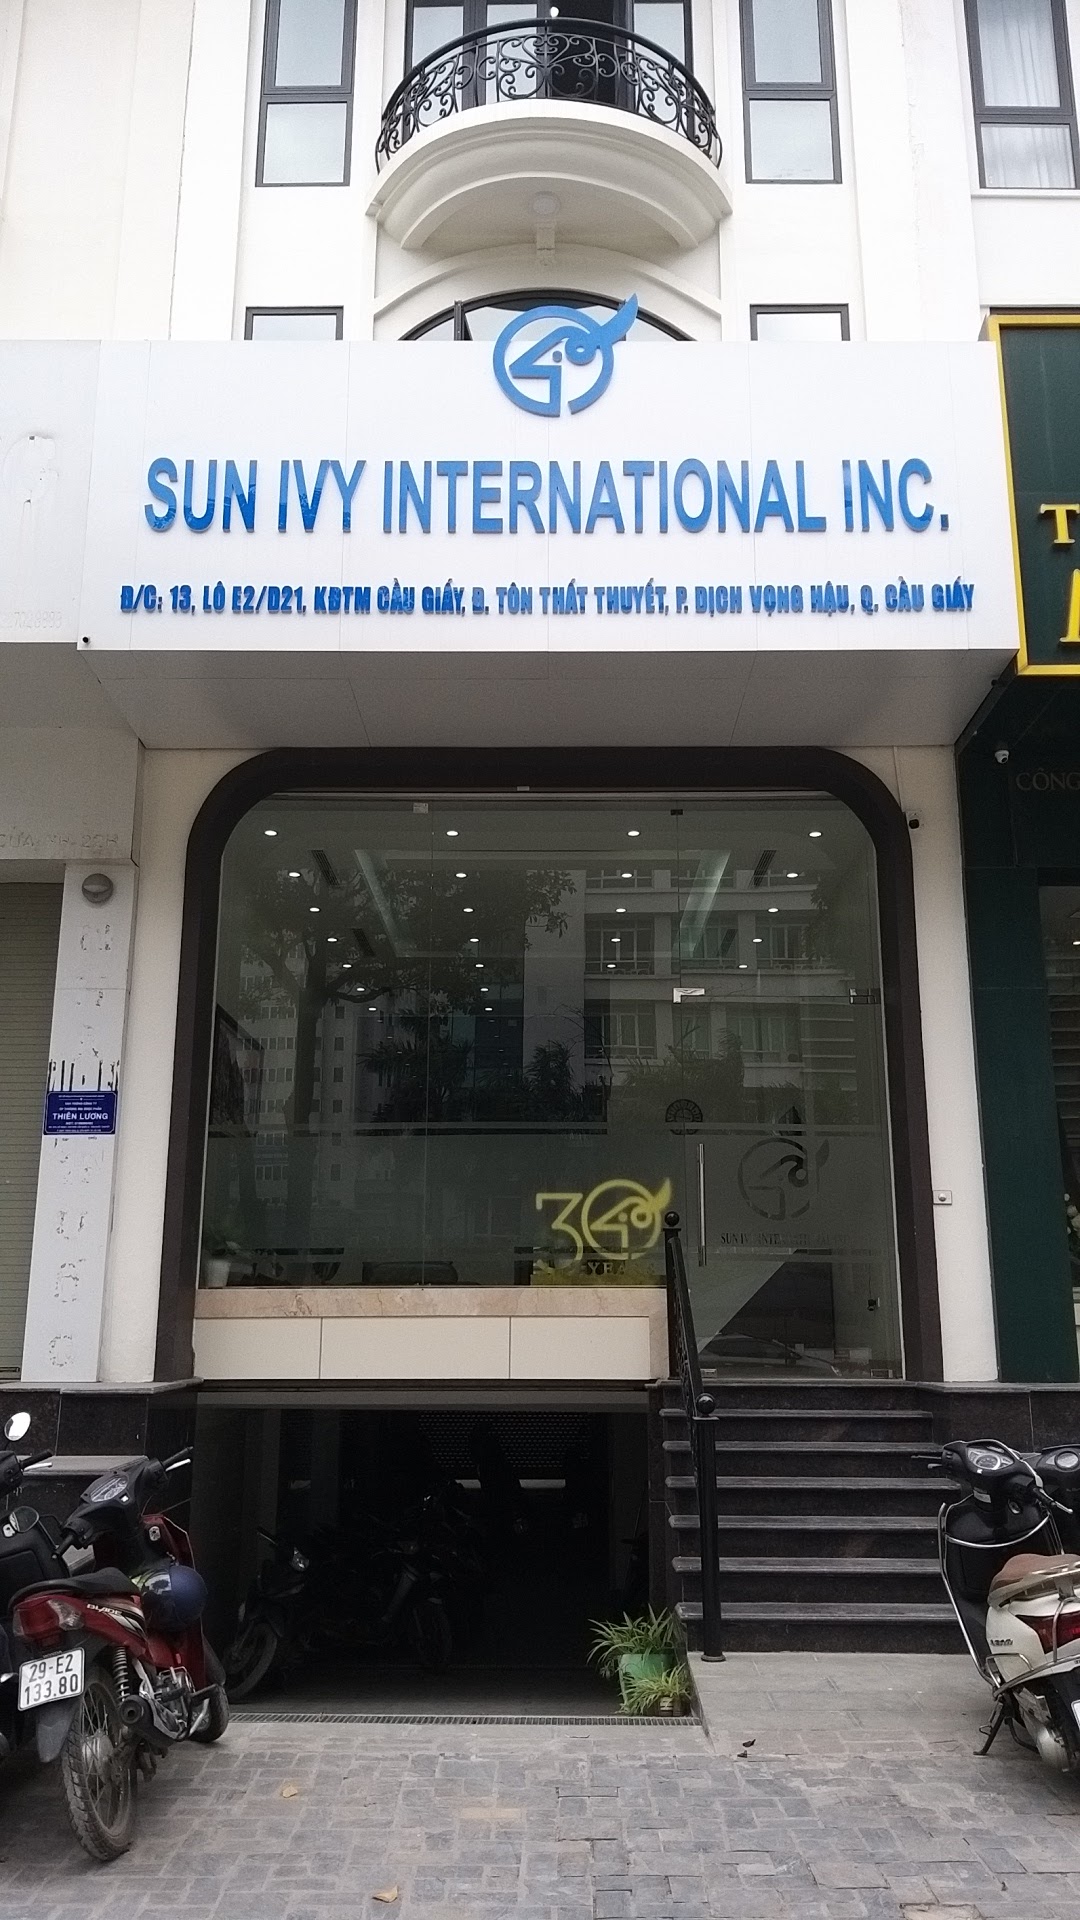 Sun Ivy International Inc.